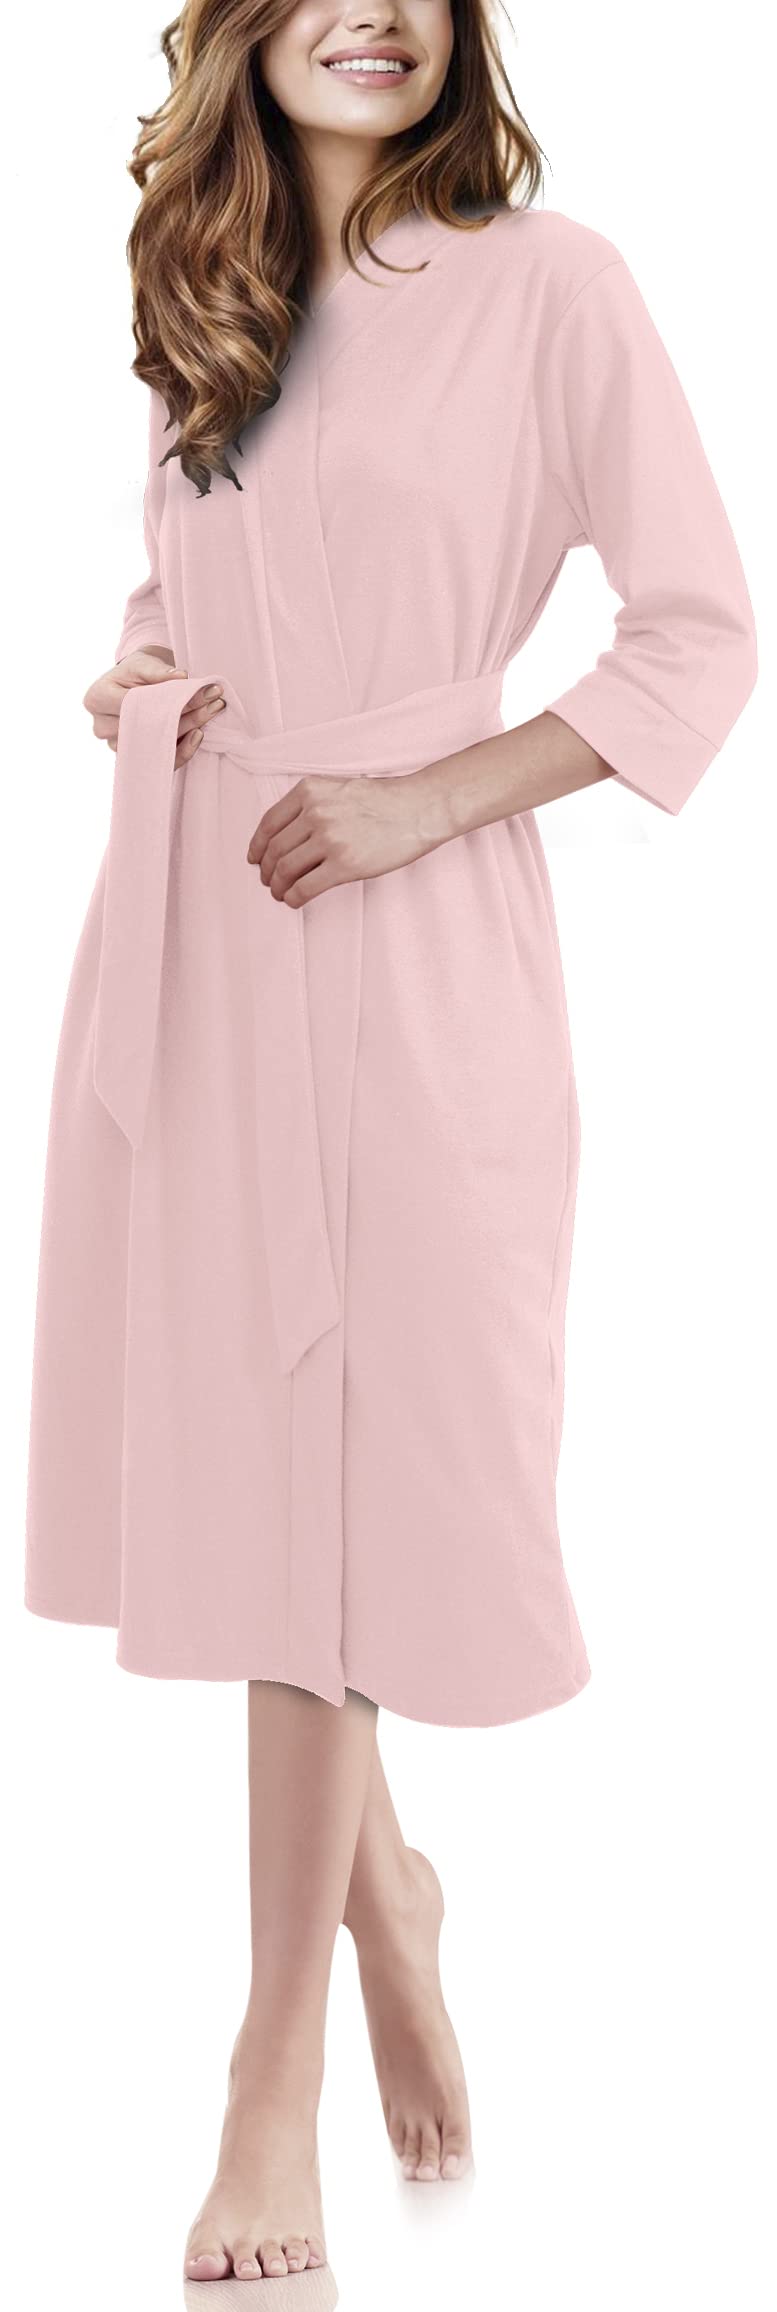 NY Threads Luxurious Women Knit Robe Kimono cotton Blend Bathrobe Ladies Loungewear Sleepwear (Medium, Baby Pink)